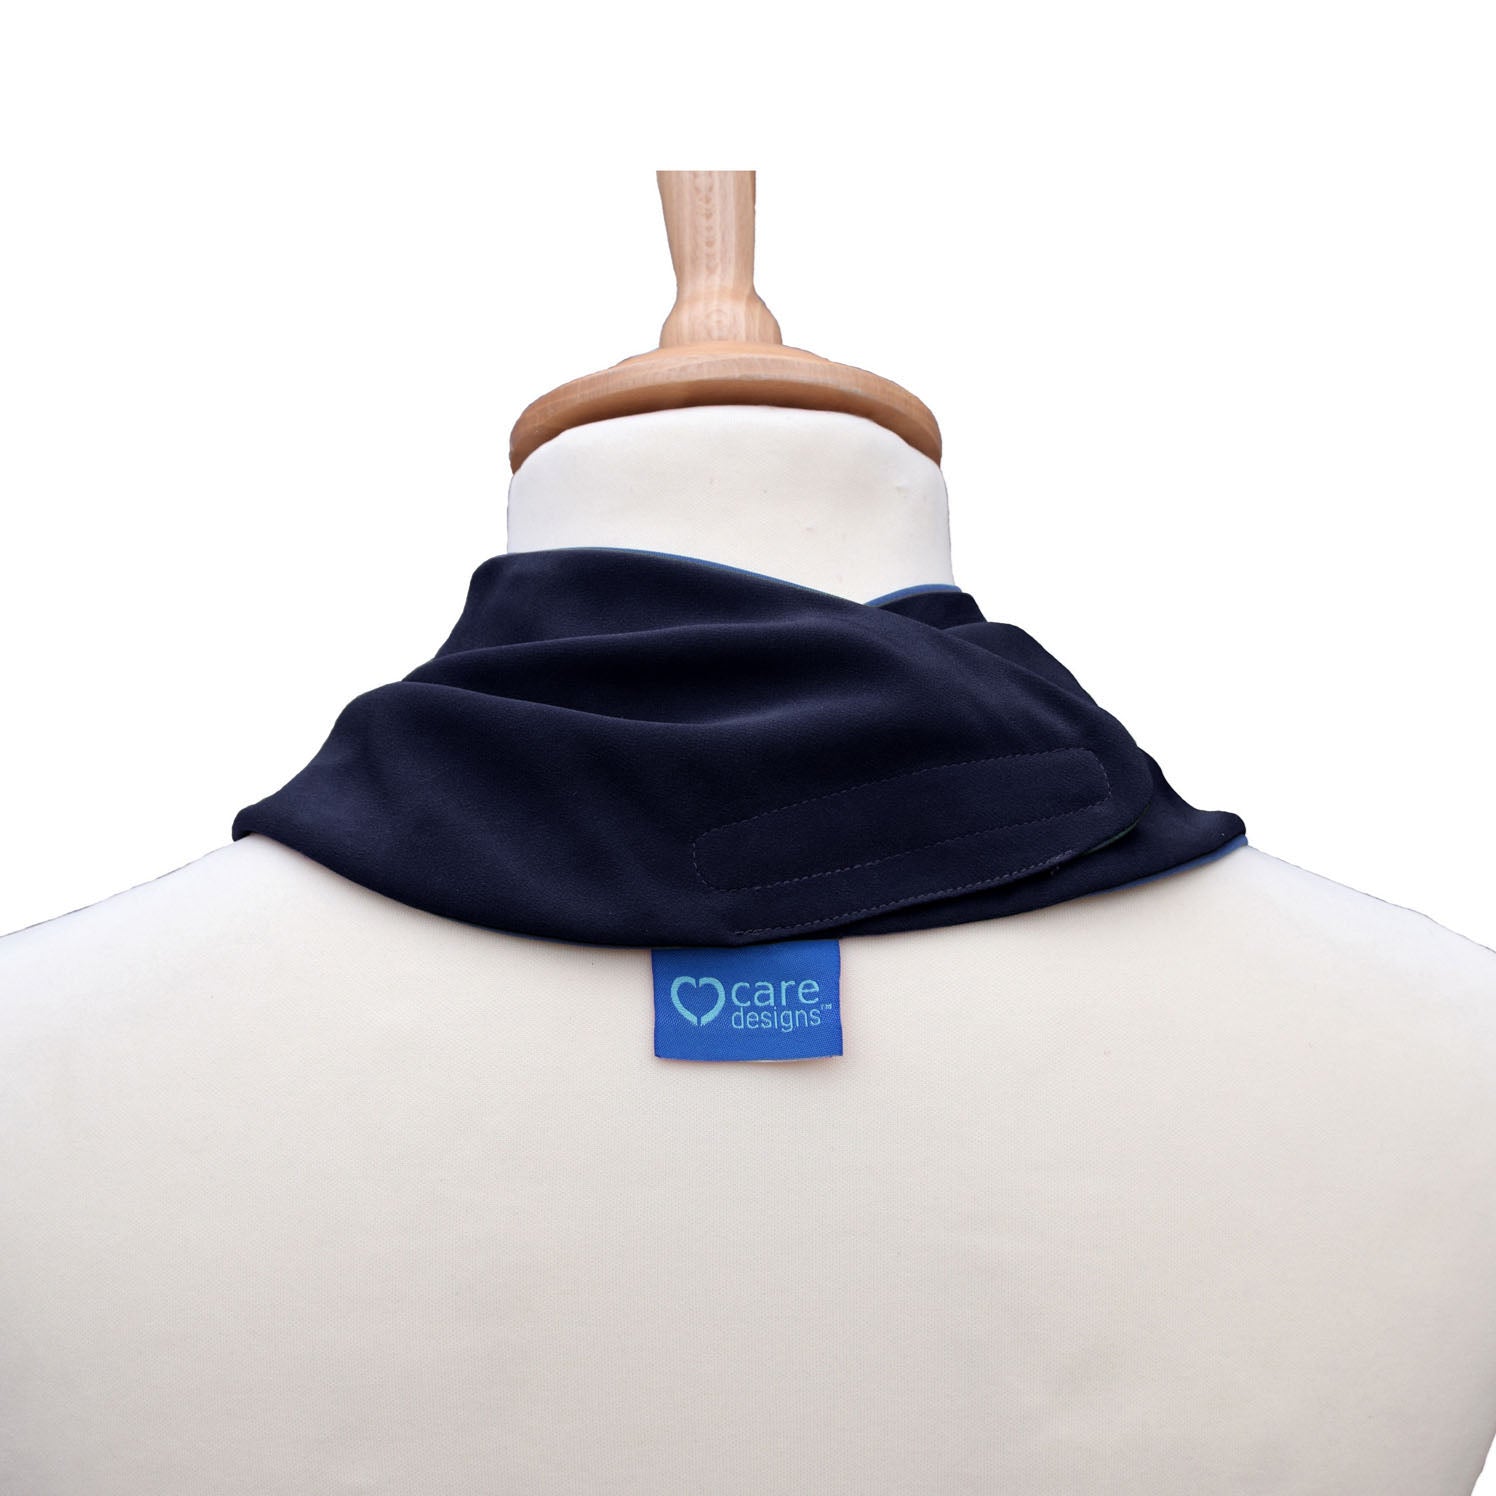 Large neckerchief style dribble bib - Charcoal Black | Health Care | Care Designs